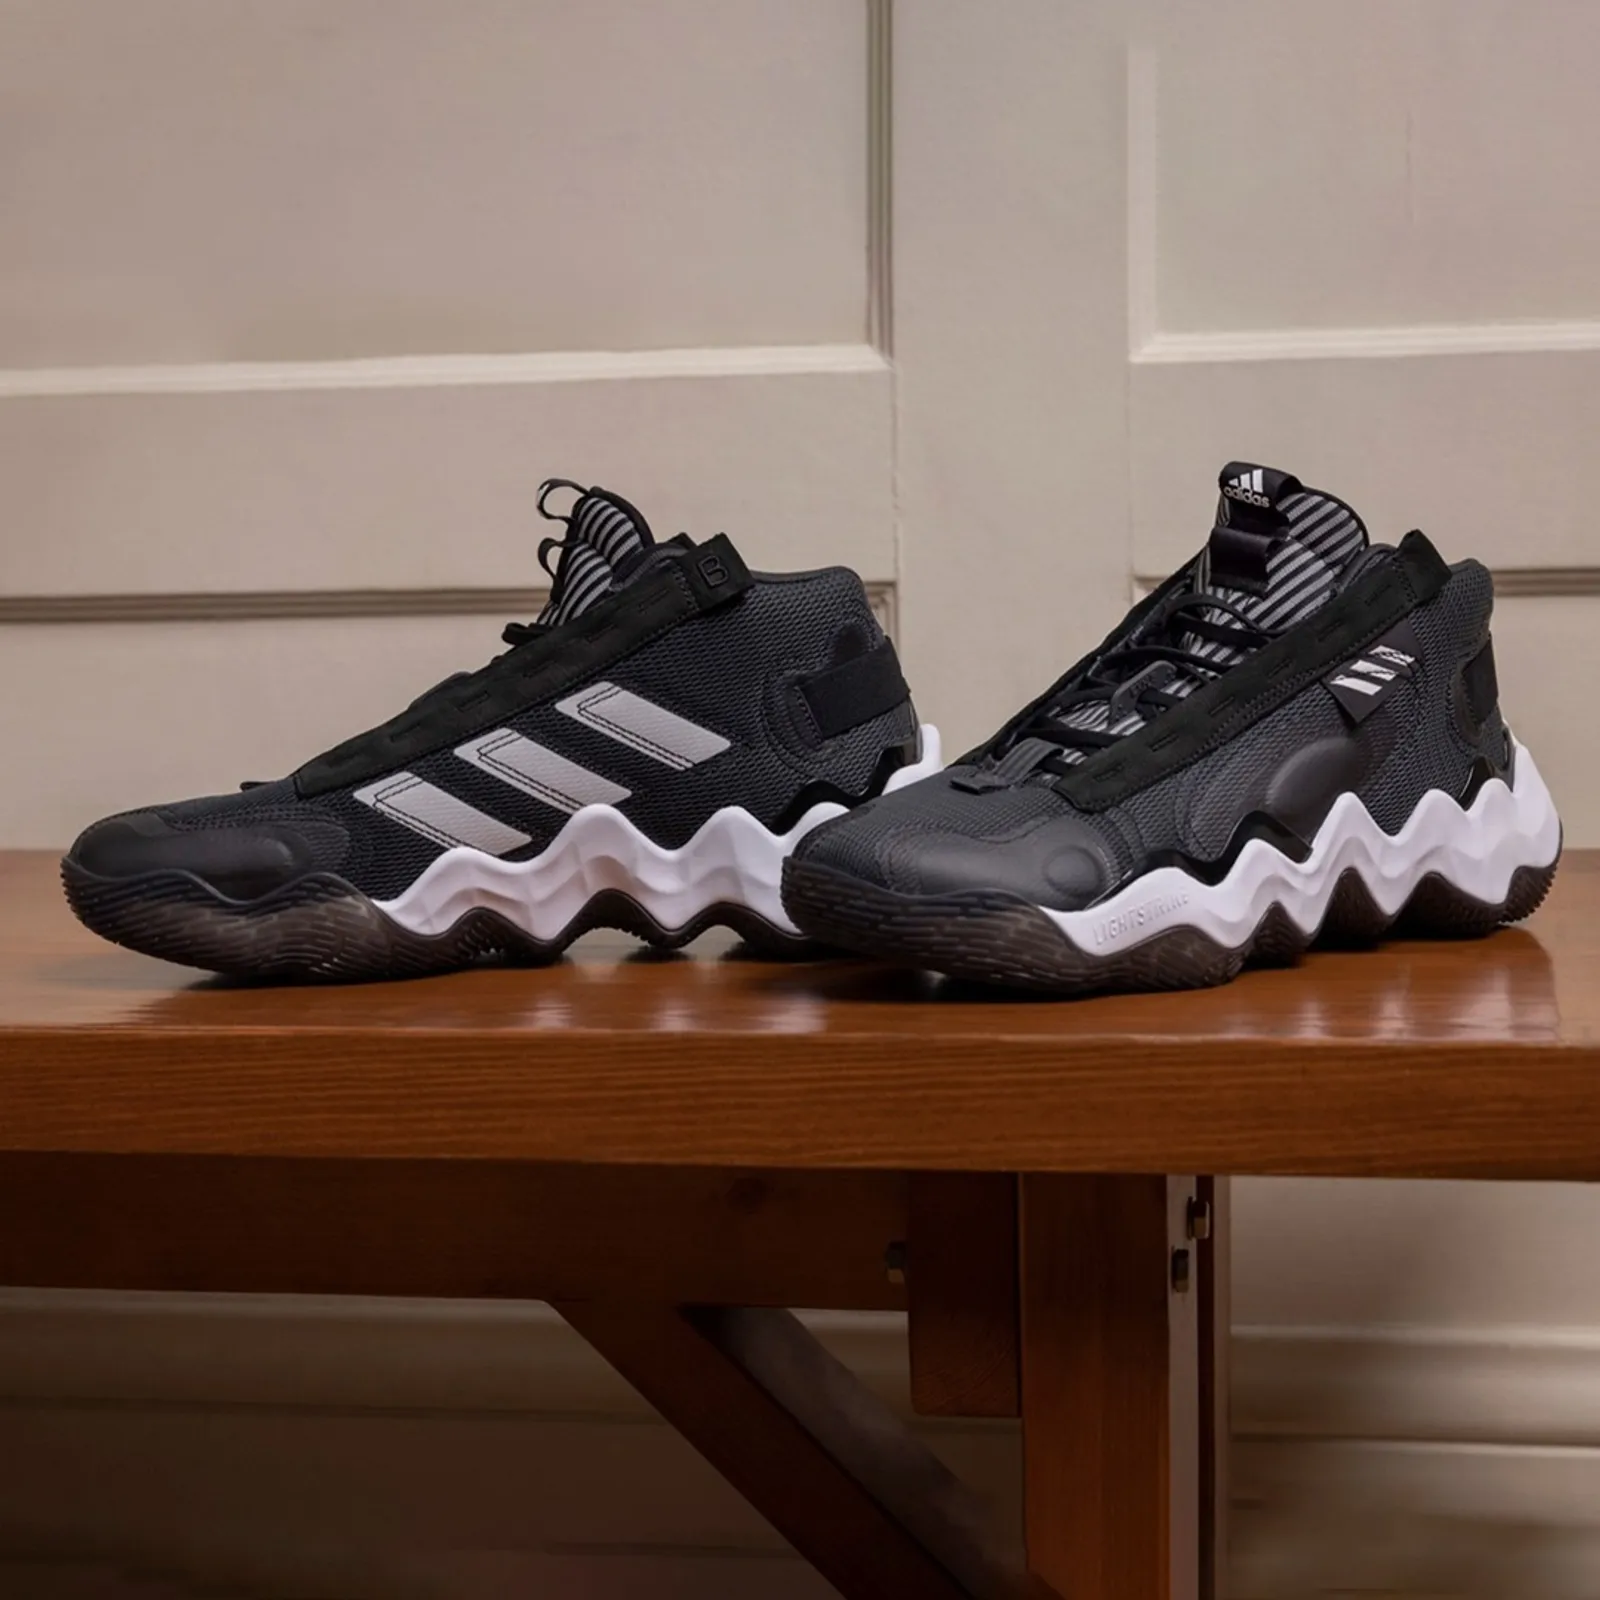 Candace Parker x adidas Rilis 6 Warna Baru Sneaker Exhibit B